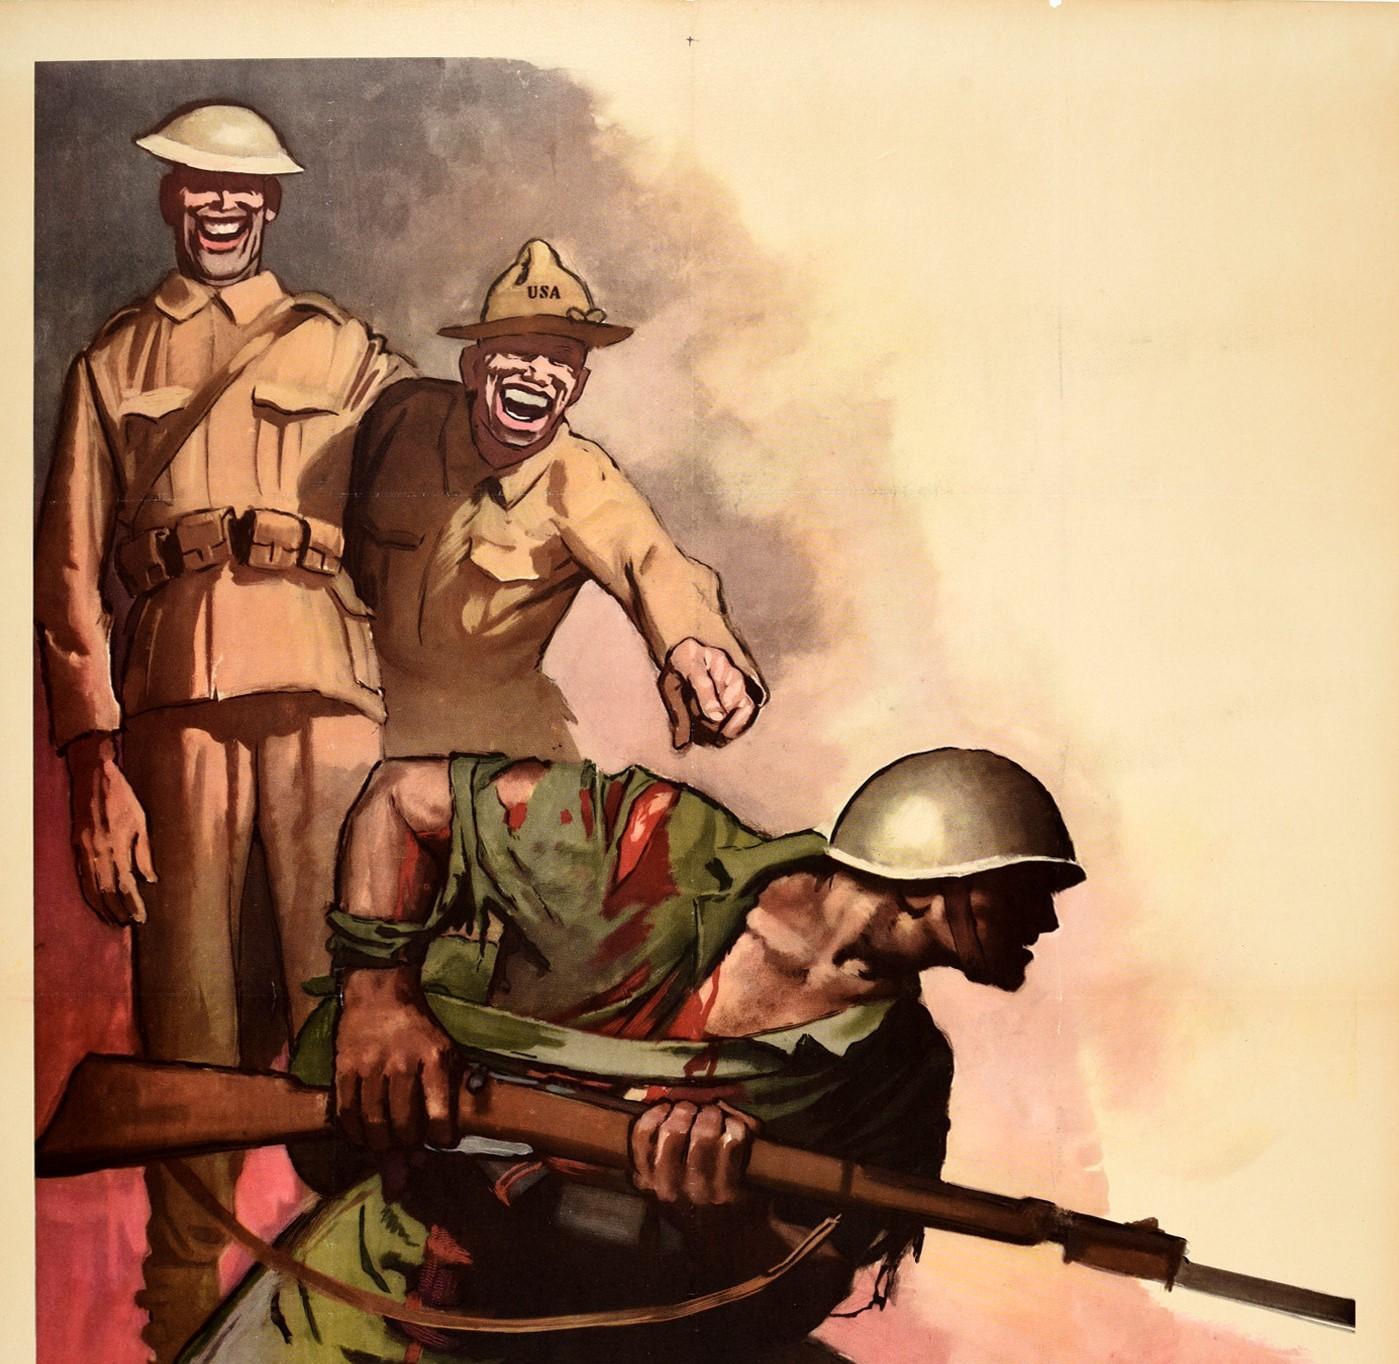 Original Vintage Poster Fratricidio Fratricide WWII Fascist War Propaganda Italy - Print by Boccasile